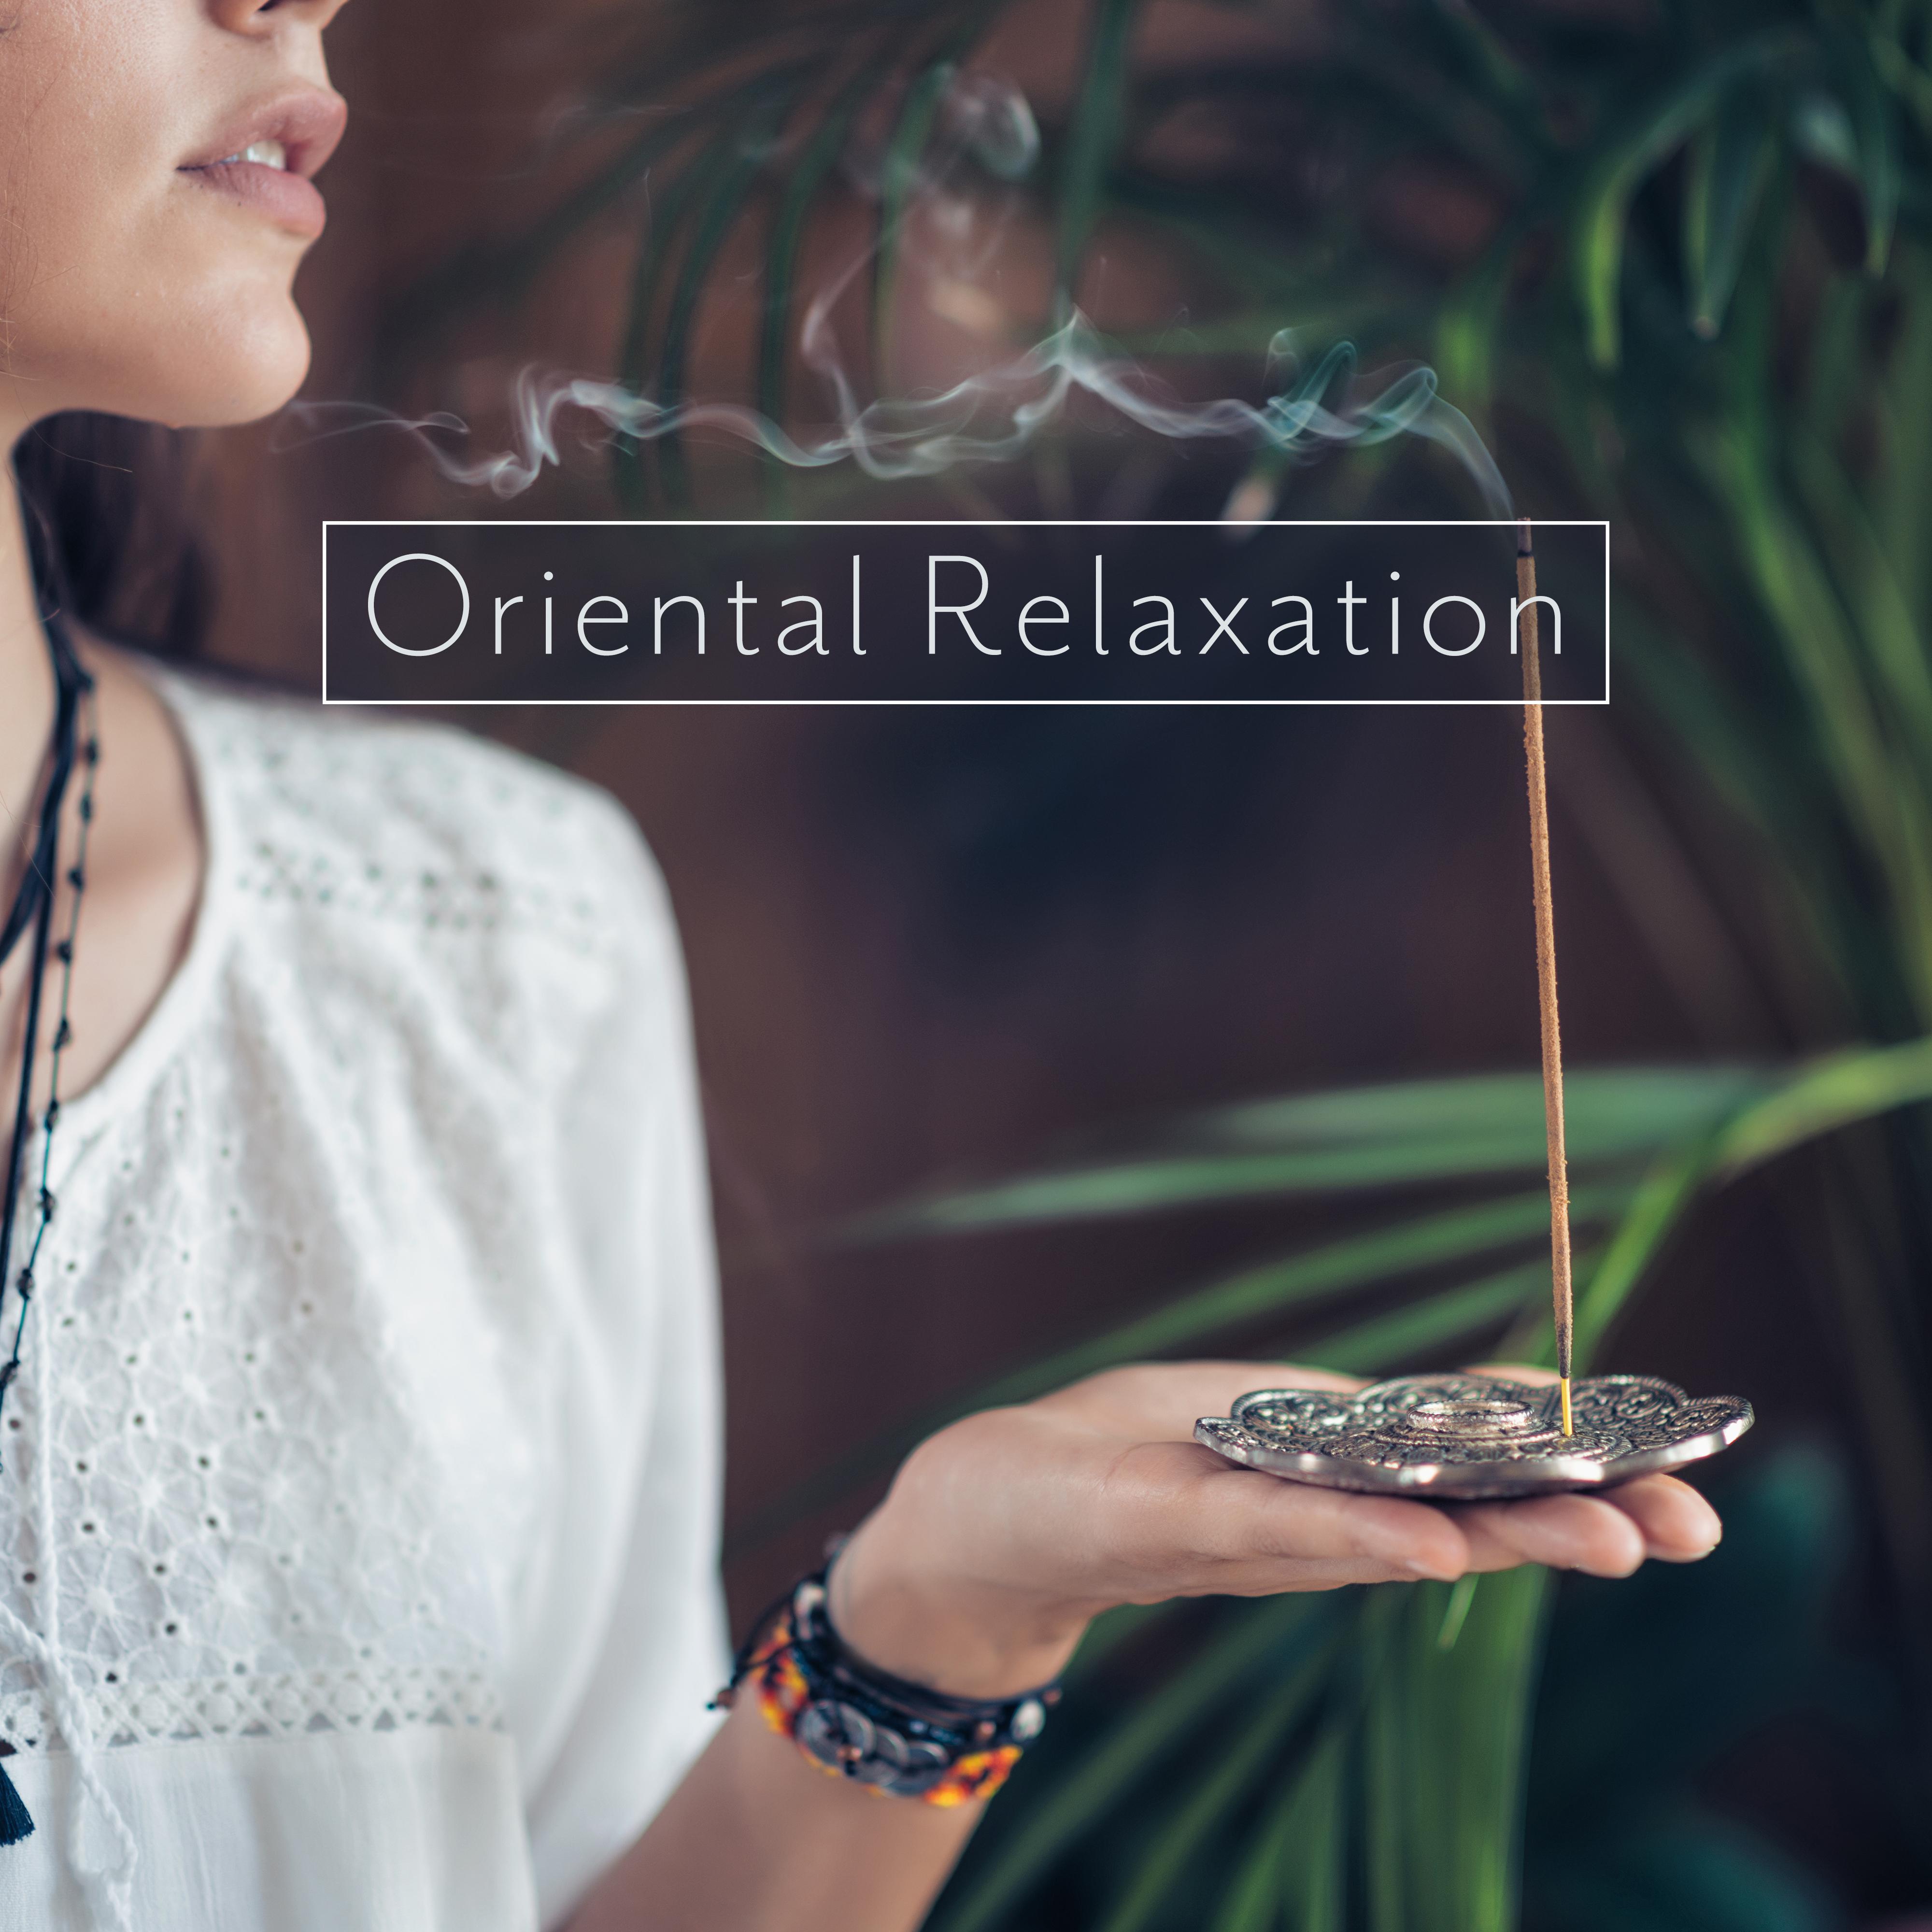 Oriental Relaxation: 15 Asian Songs to Rest, Calm Down, Yoga Chill, Deep Meditation, Spiritual Awakening